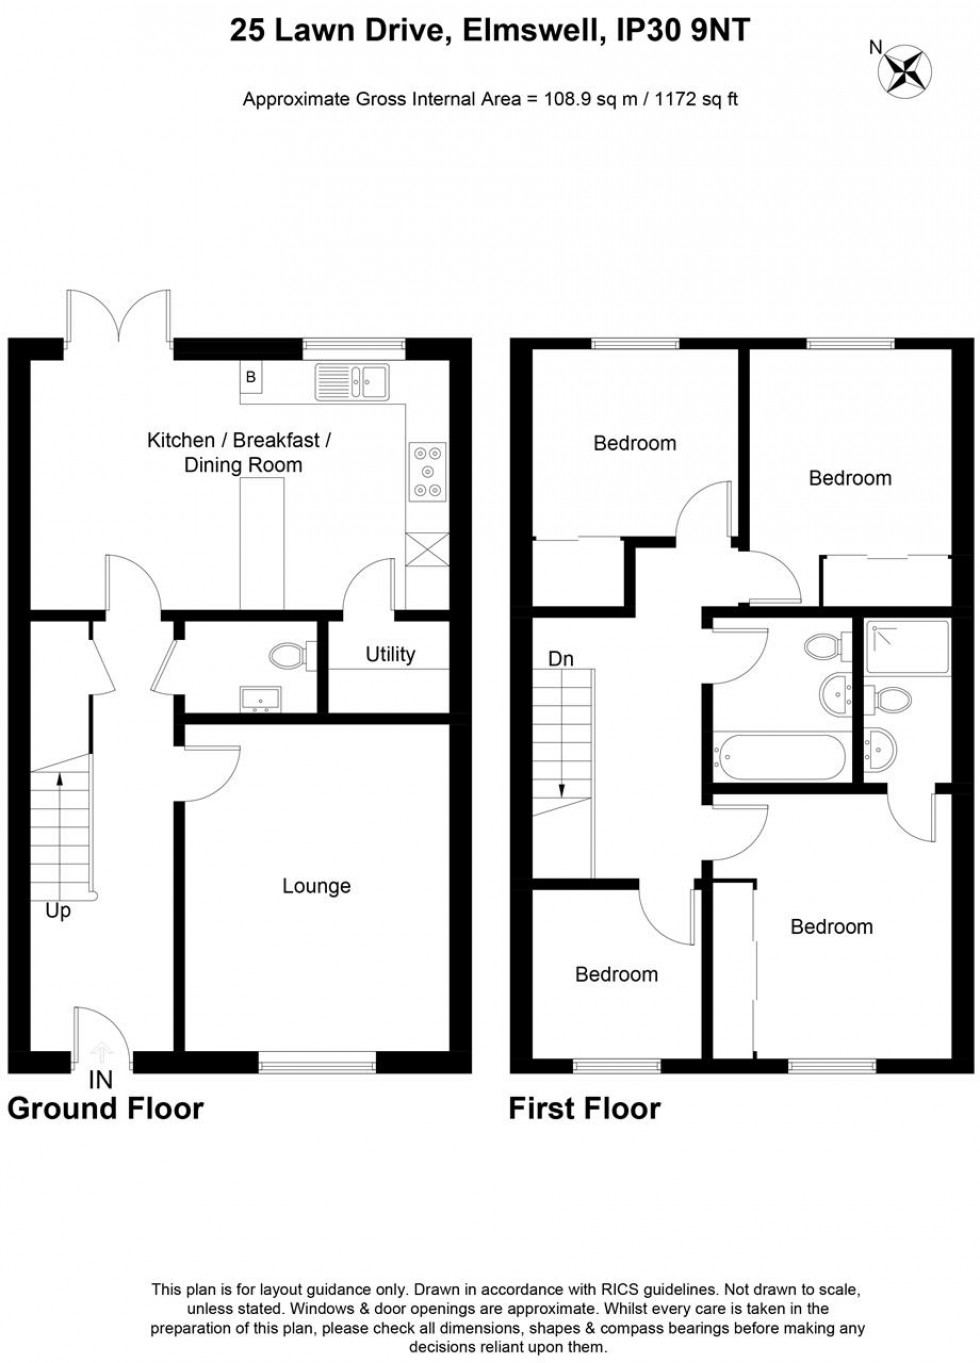 Floorplan for Lawn Drive, Elmswell, Bury St Edmunds, IP30